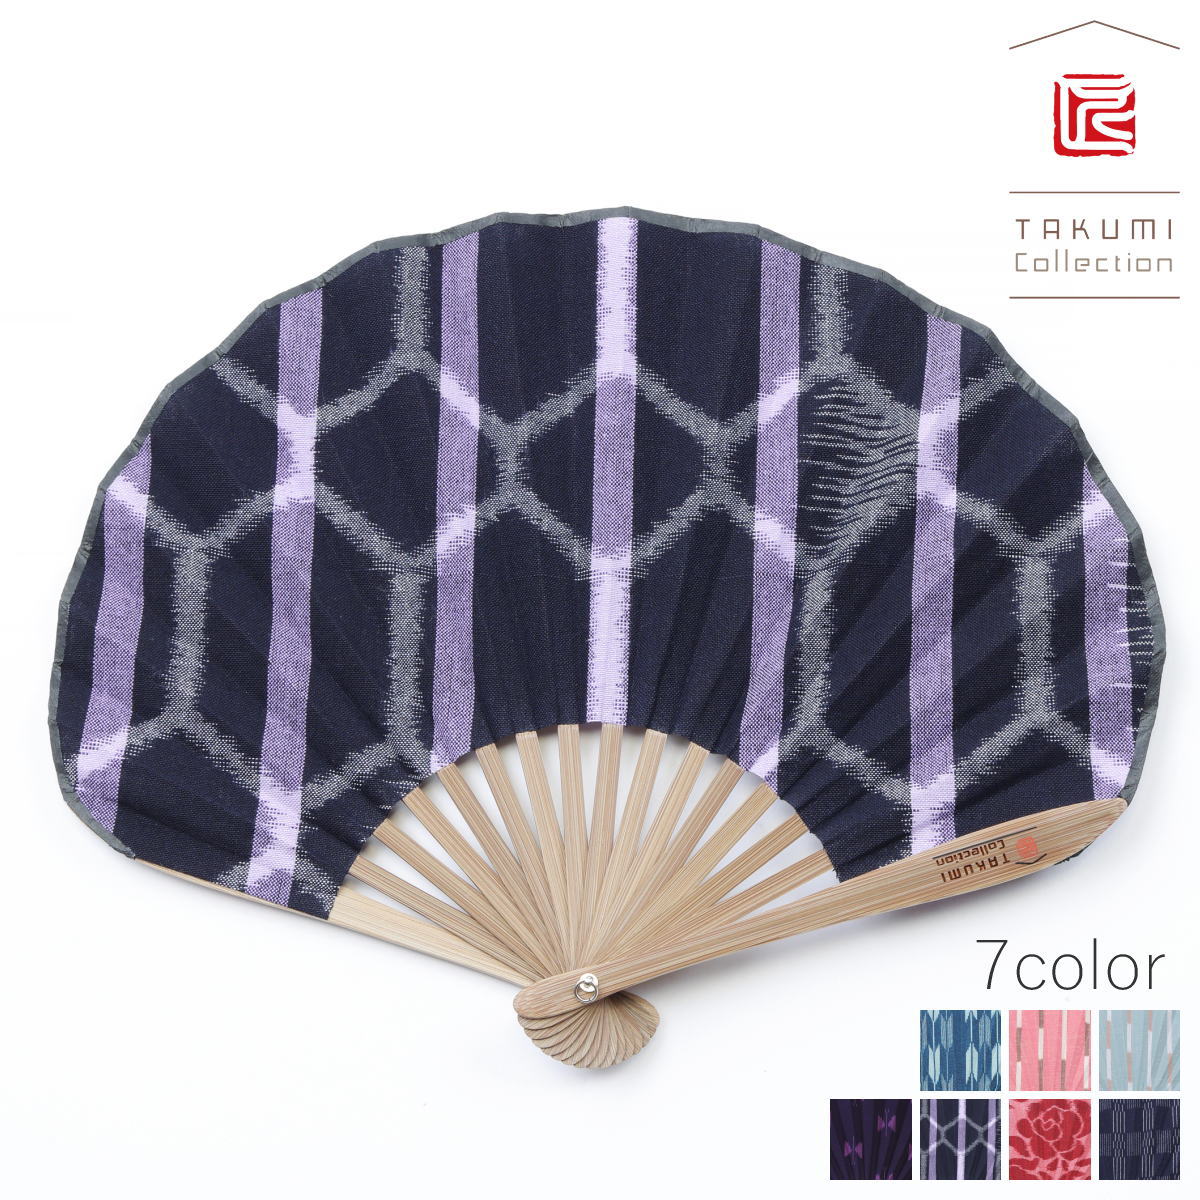 TAKUMI Collection 久留米絣 扇子 貝殻型 7色展開 タクミコレクション 和装 母の...